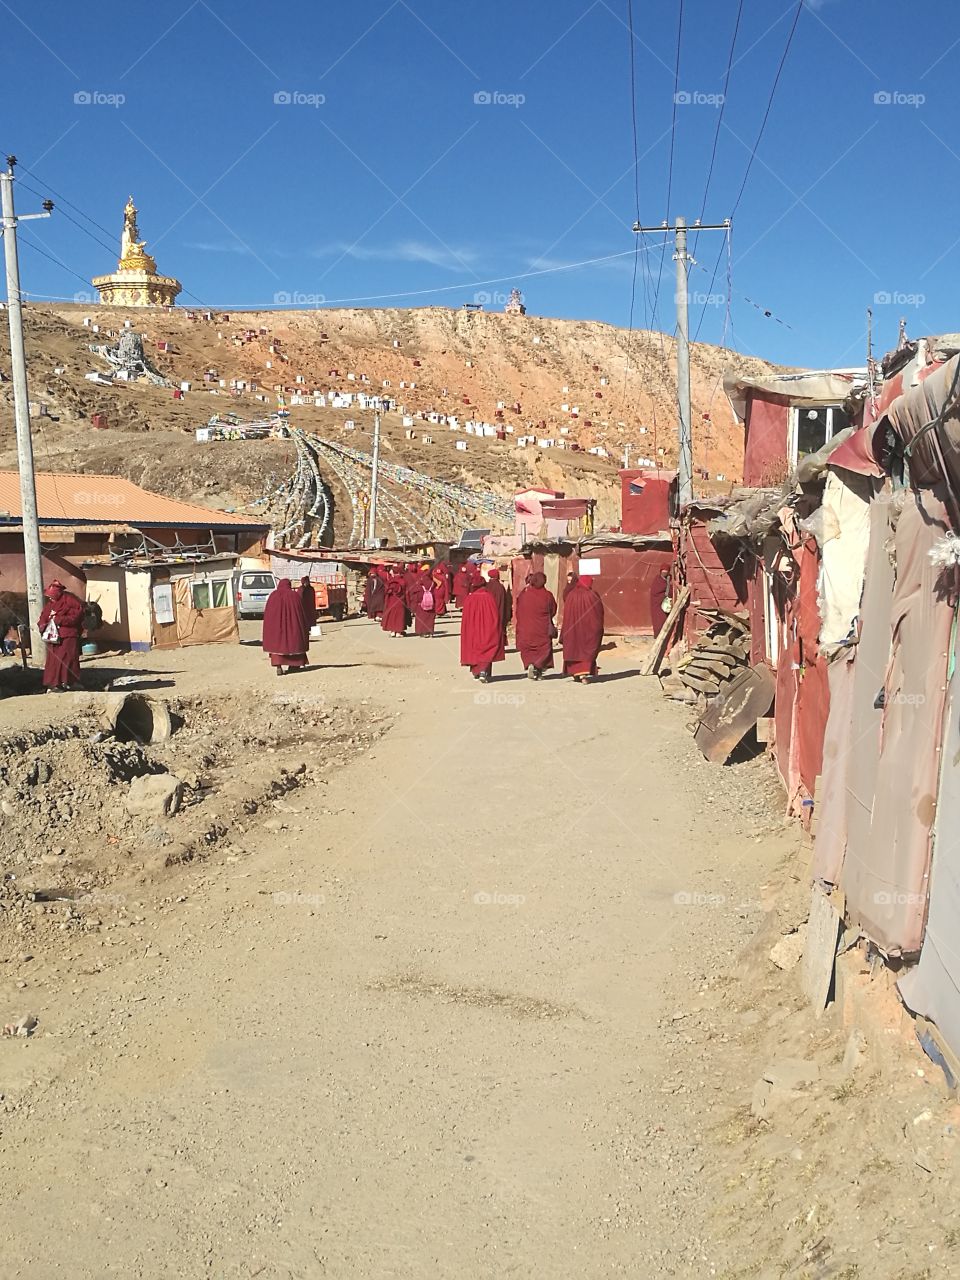 Yaqing Tibetan Buddhist Monastery for Nuns

Buddhism School and Monastery in Ganzi, Sichuan Province, China